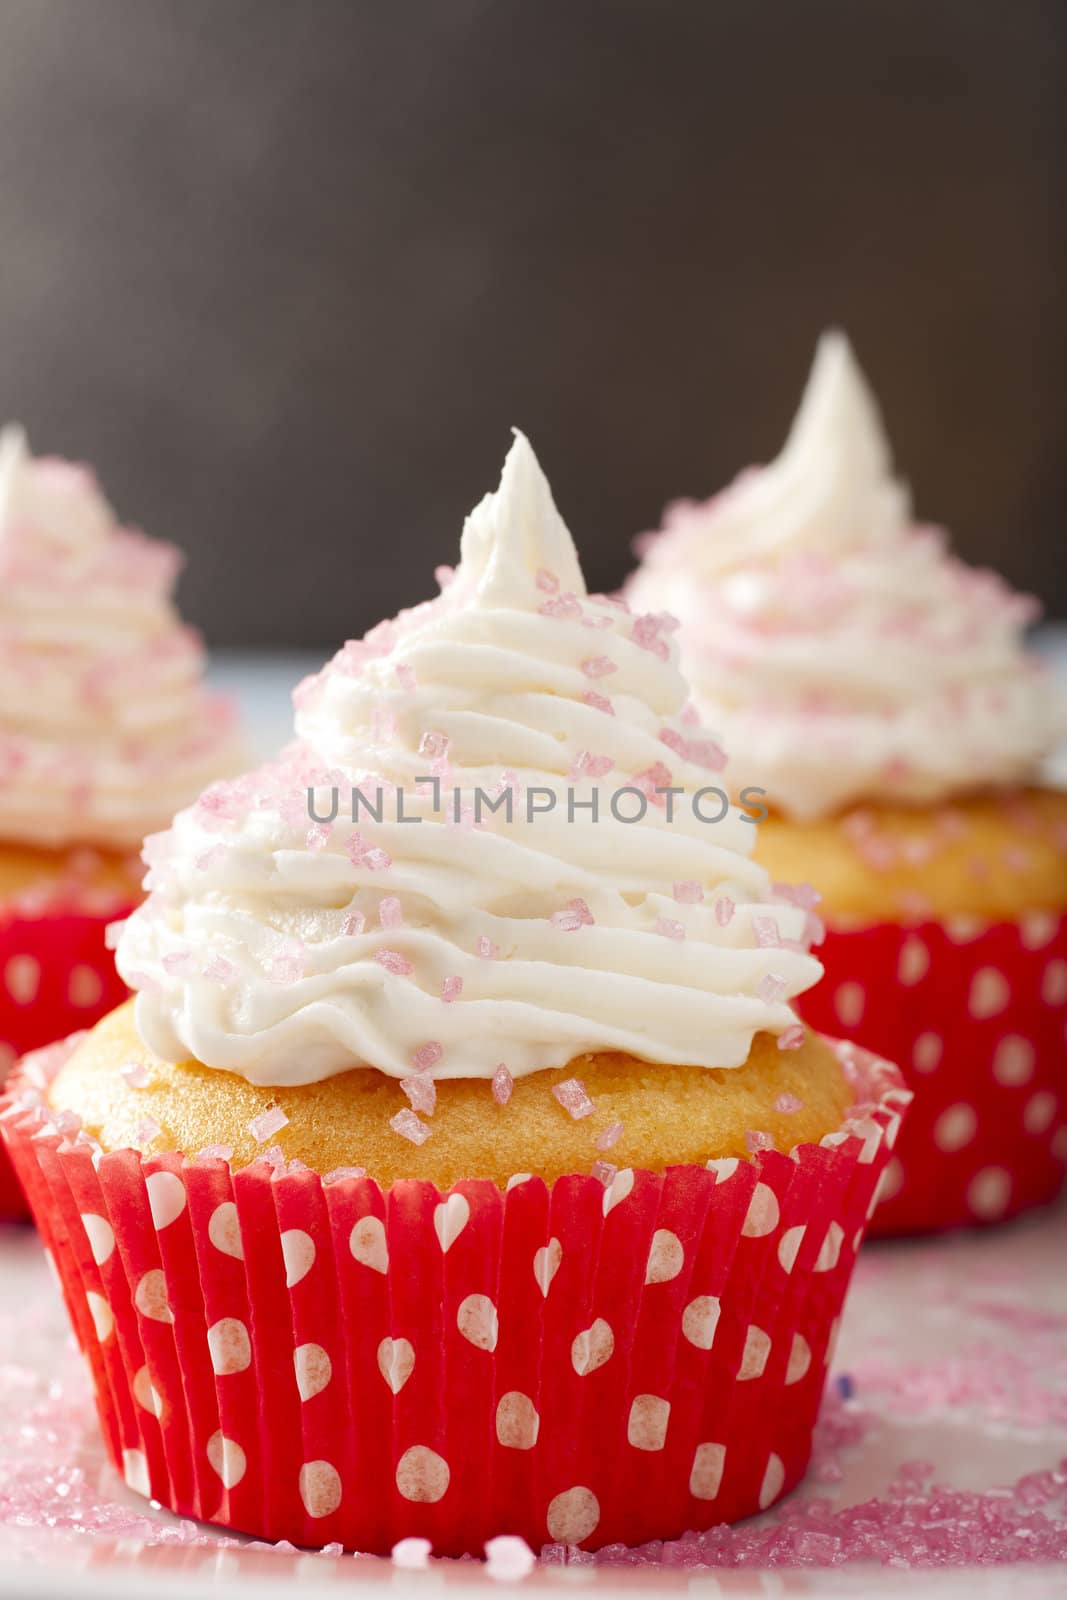 Cupcake and Sprinkles by charlotteLake